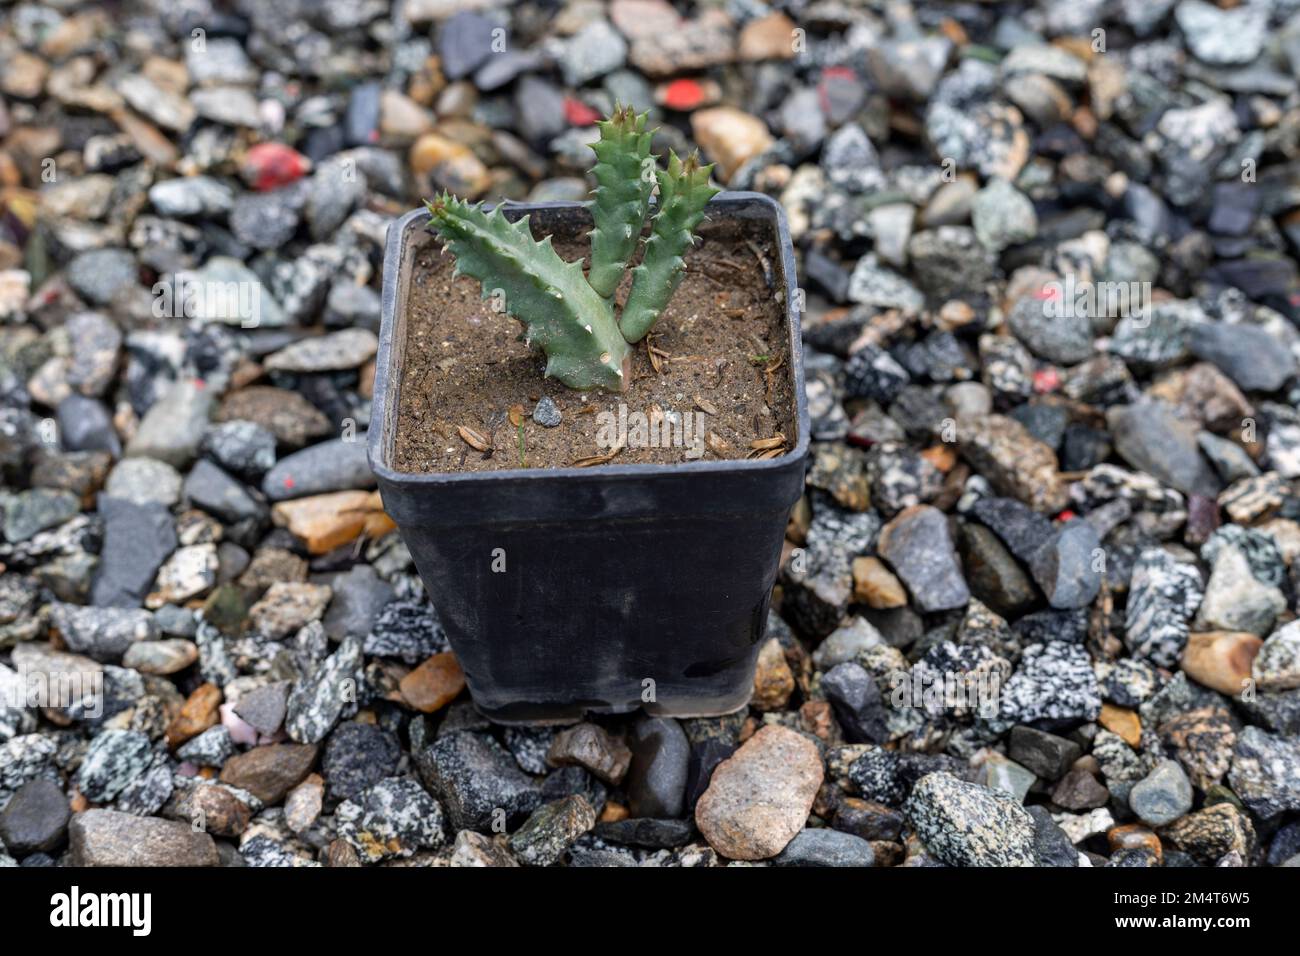 Orbea huernia small plant in a plastic container Stock Photo